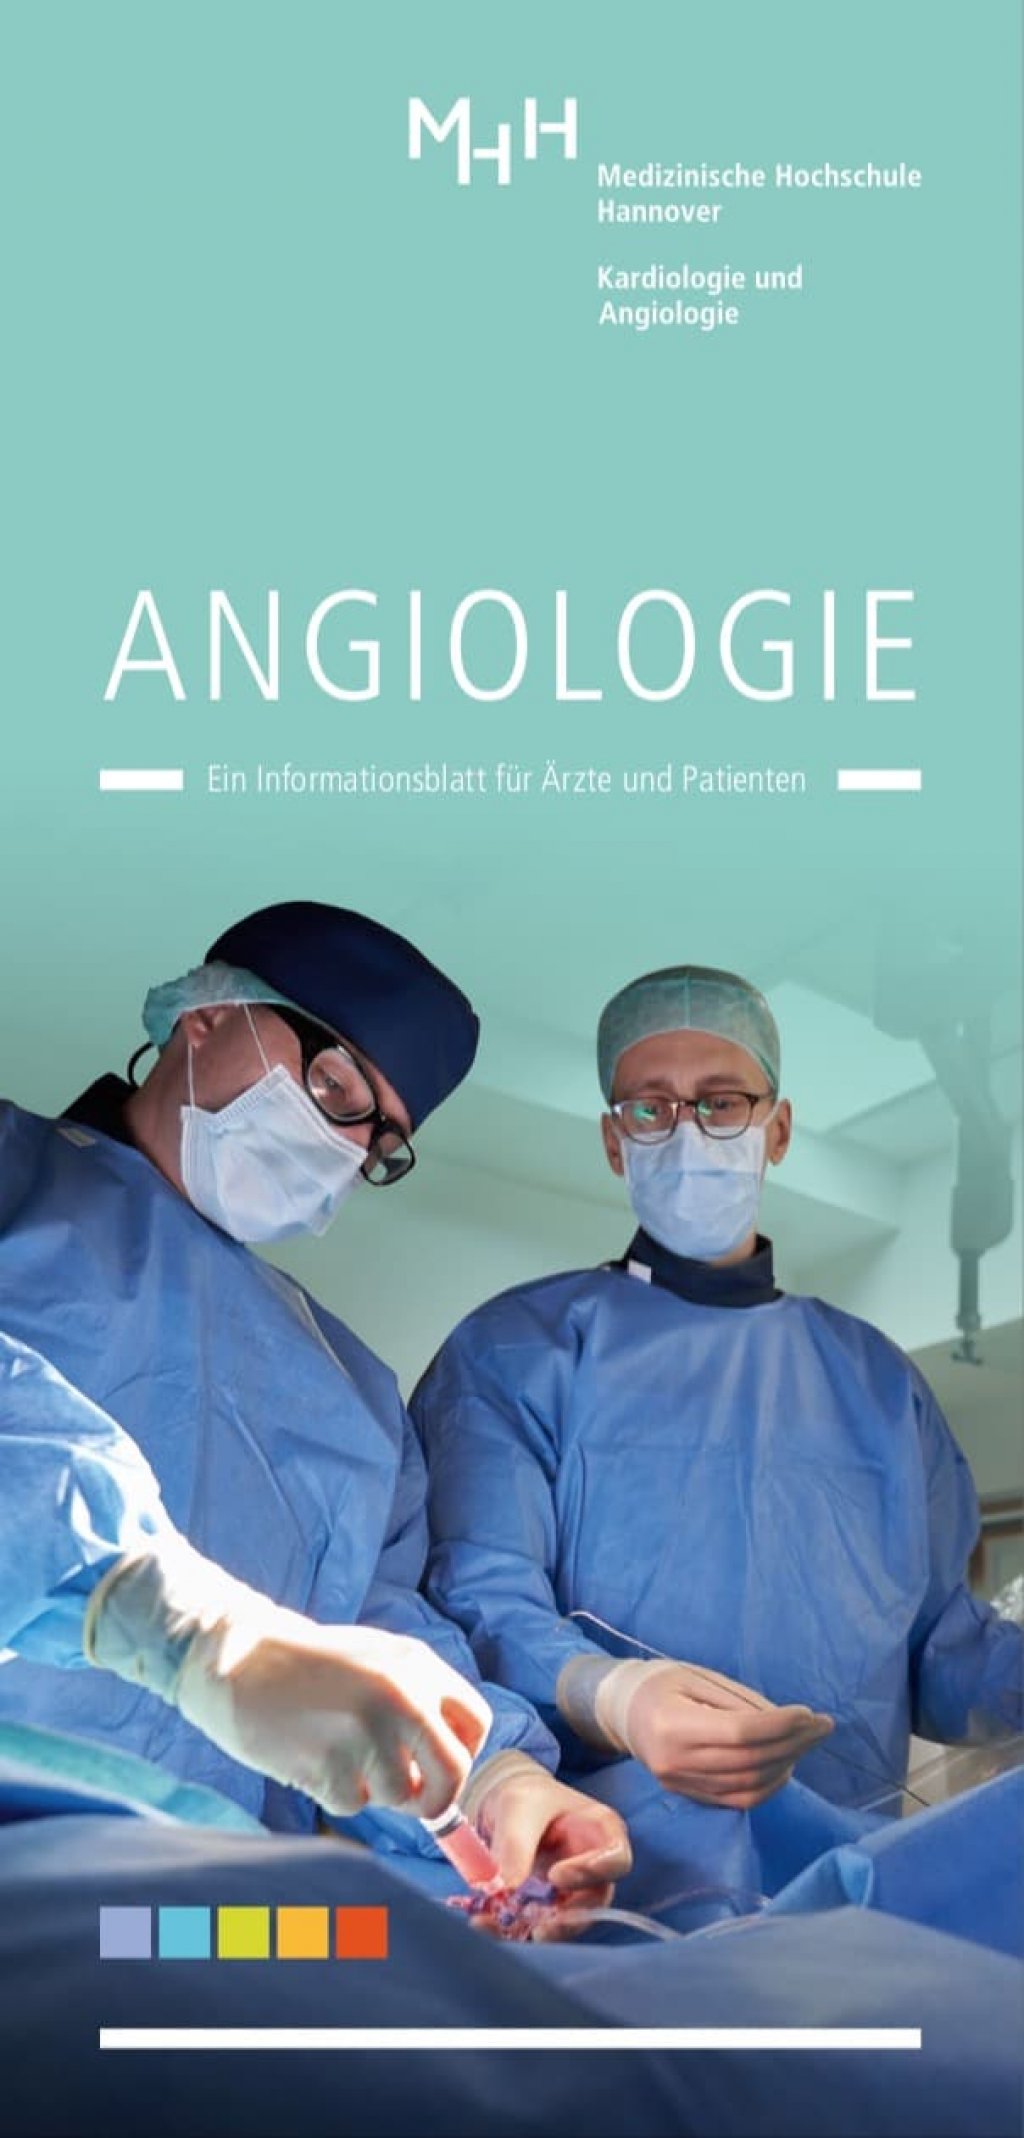 MHH_Angiologie_Flyer_2020.JPEG-5d314e23